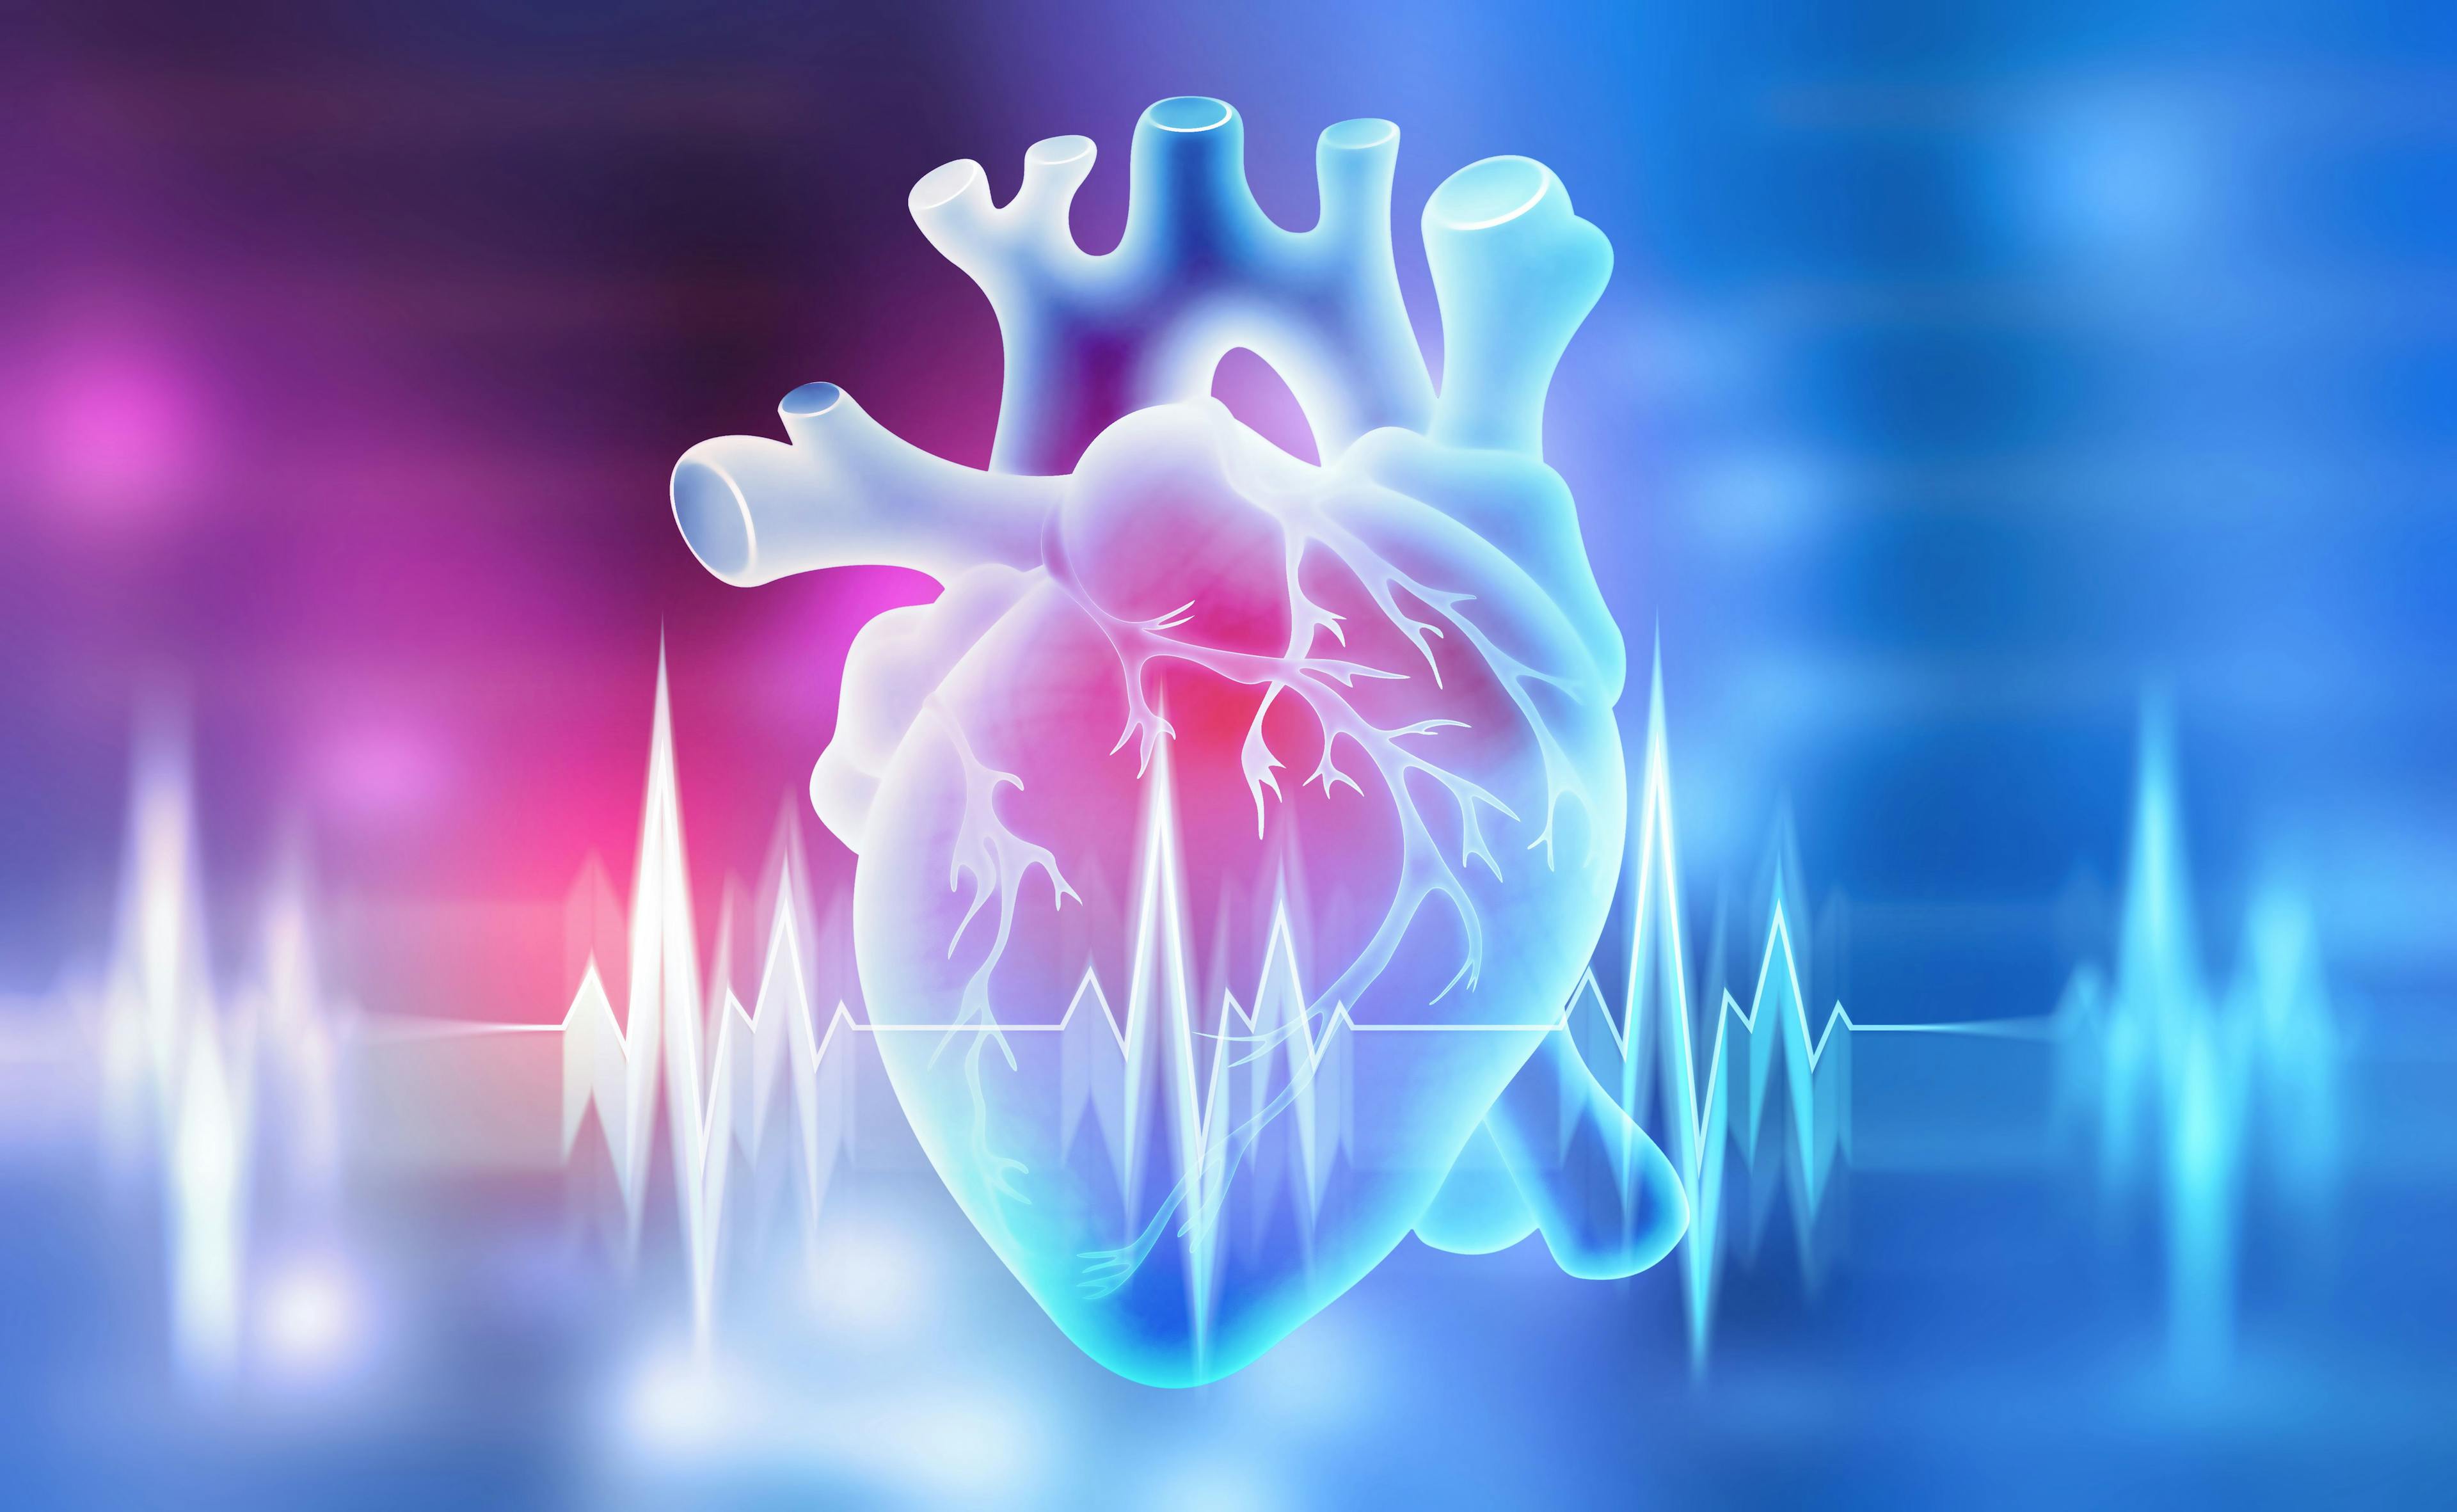 Human heart. 3D illustration on a medical background. Credit: Siarhei - stock.adobe.com